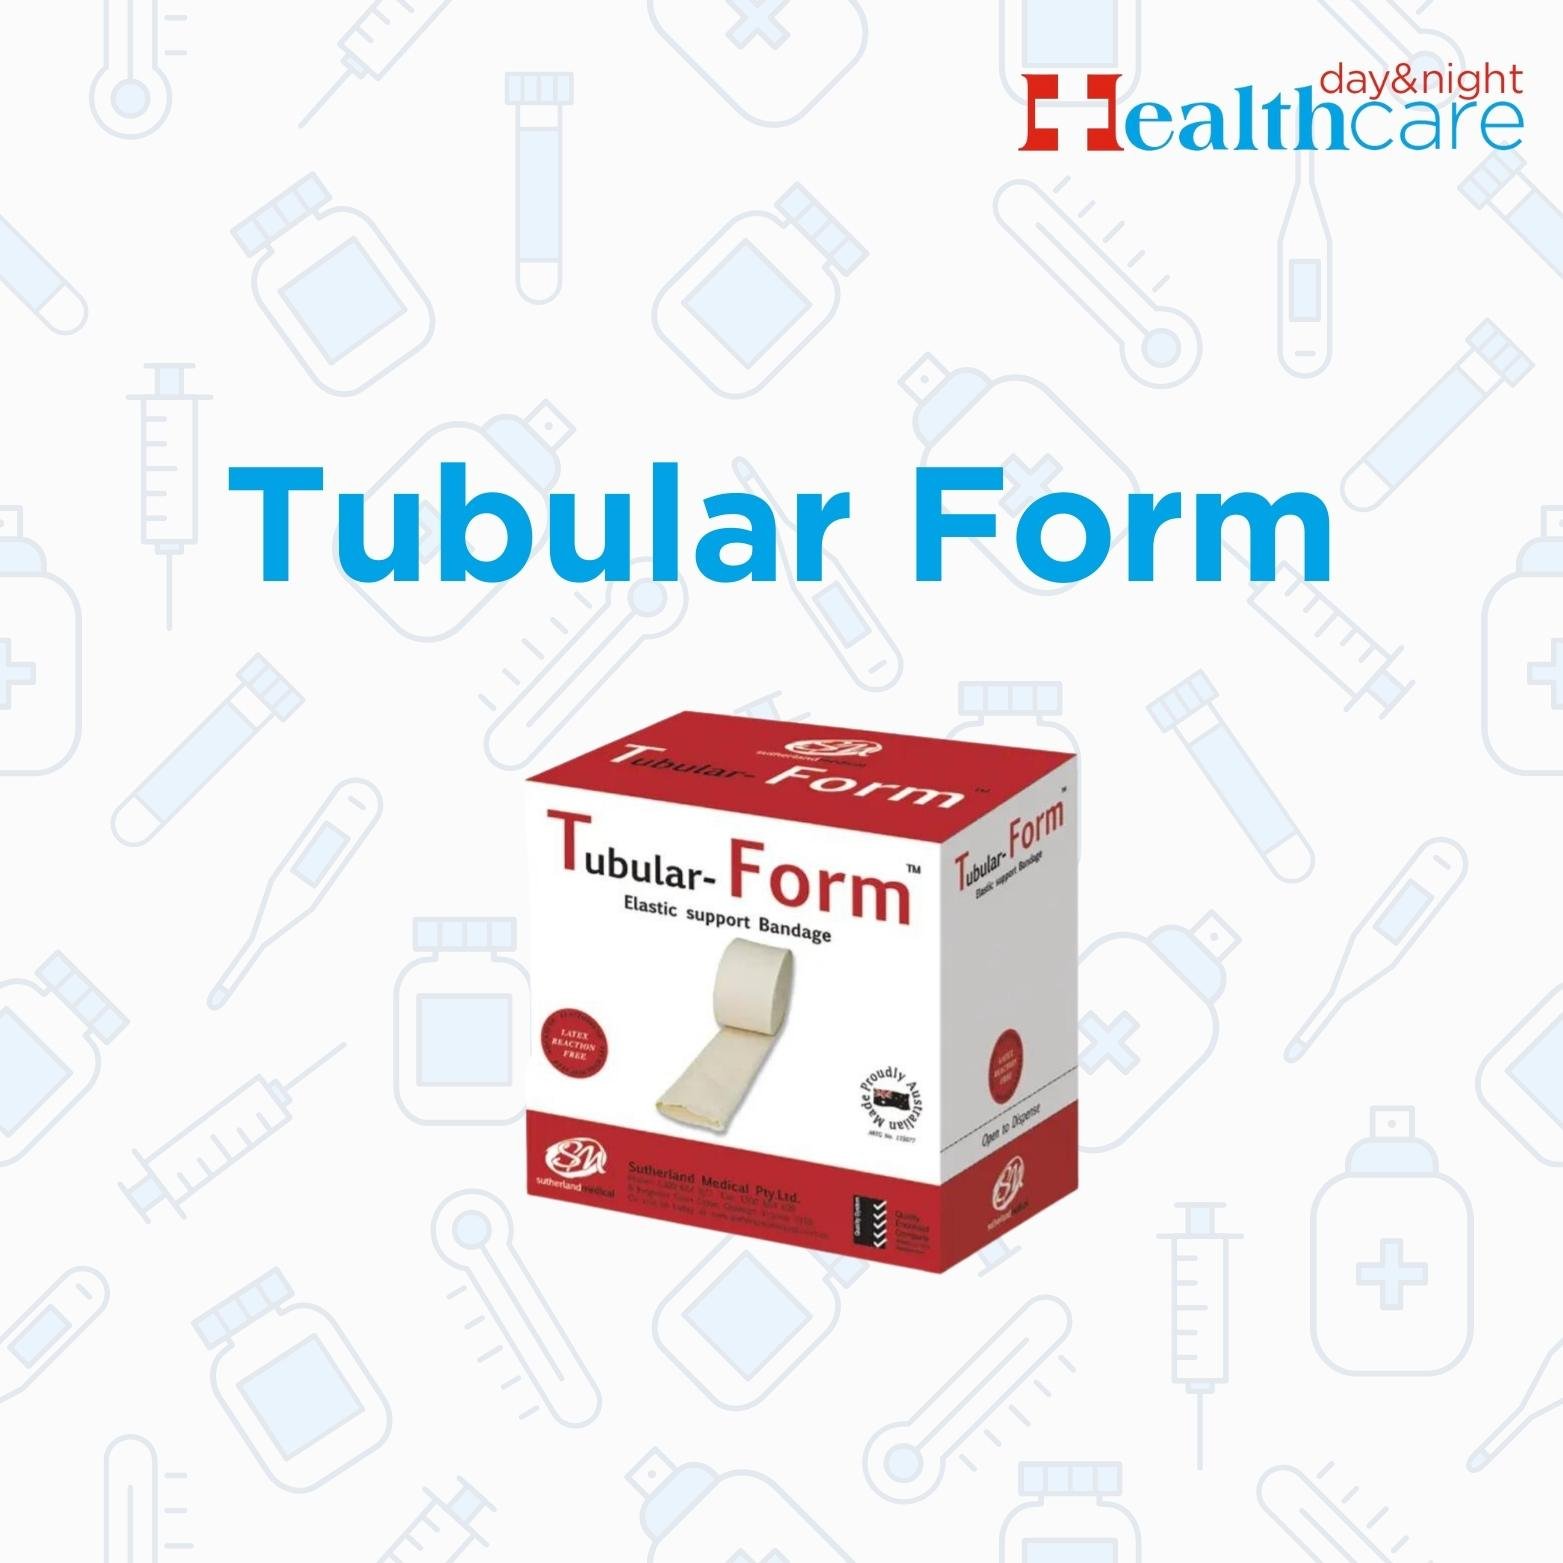 Tubular Form